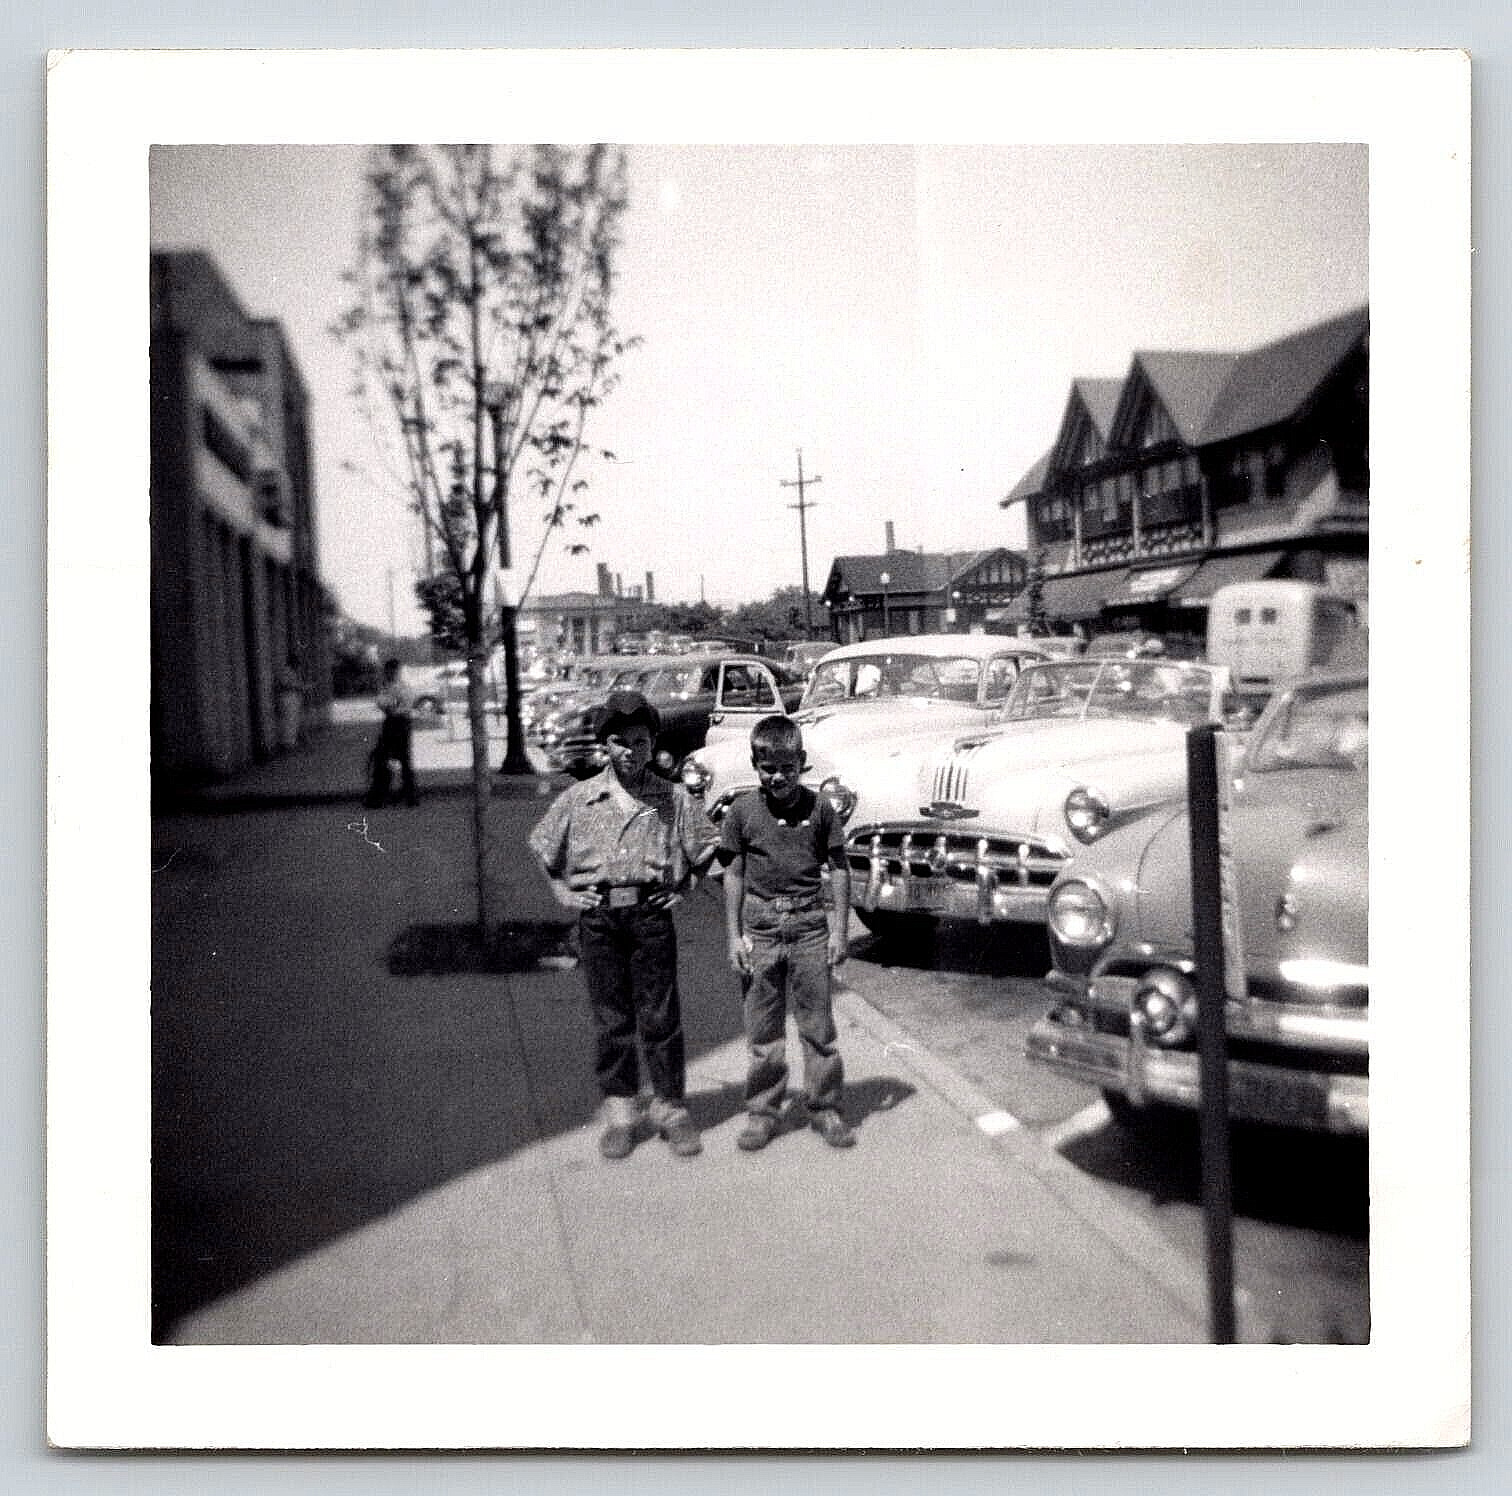 Photograph VTG Automobiles Boys Cars Town Buildings Street View Fashion 1950\'s